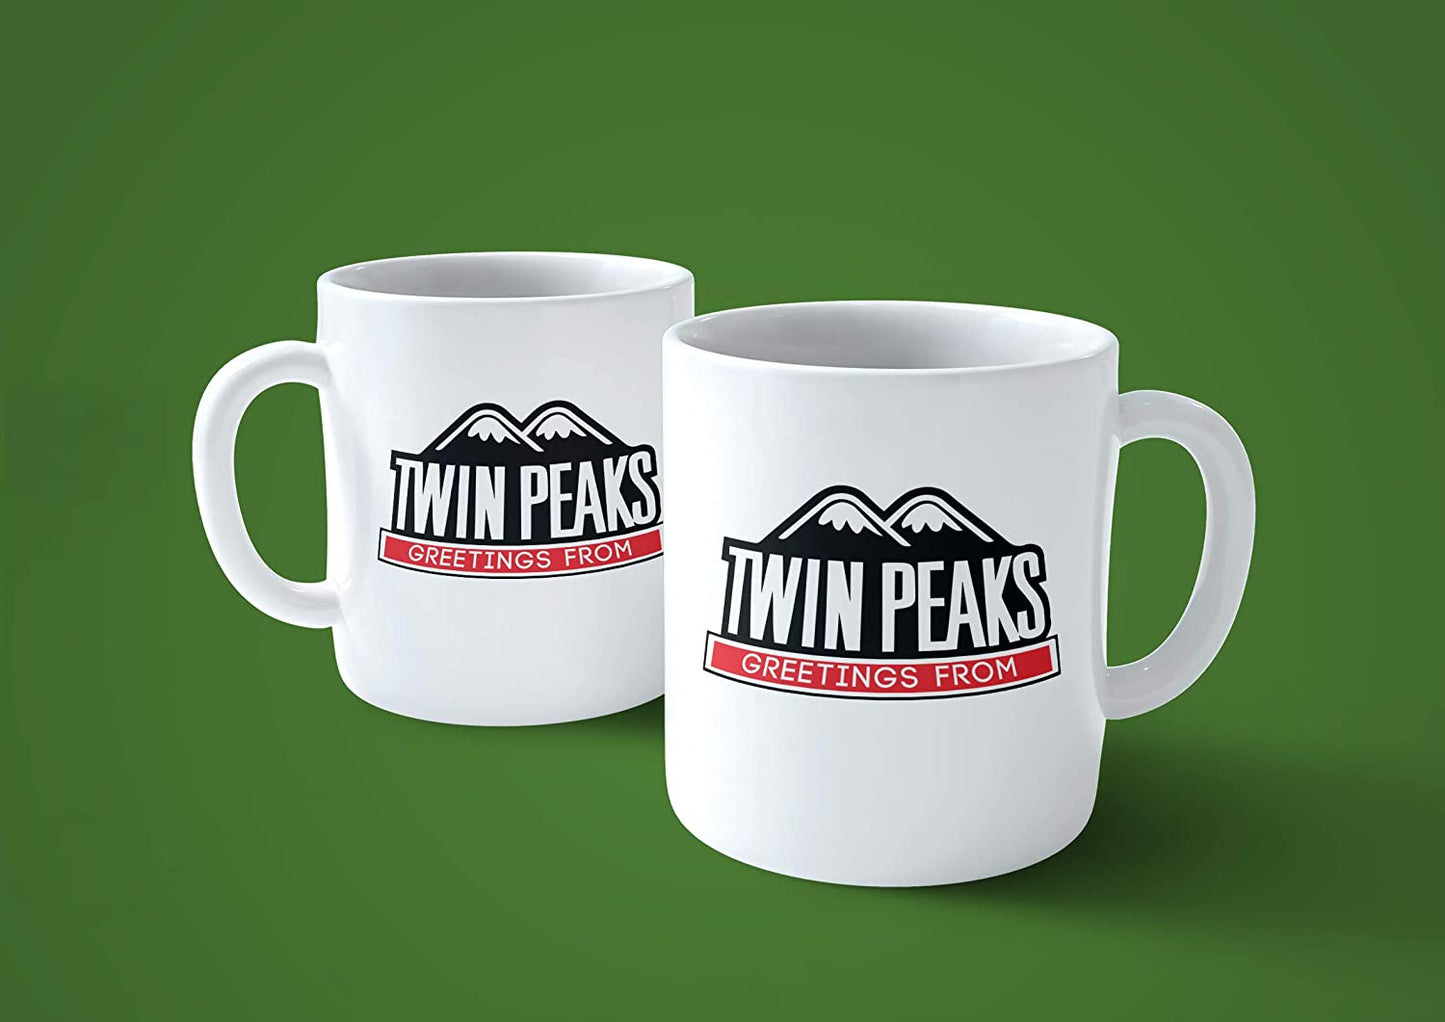 Lavender Tazza Twin Peaks Cartello Cittˆ - Mug sulla Serie TV Cult di Lynch - Choose ur Color Cuc shop